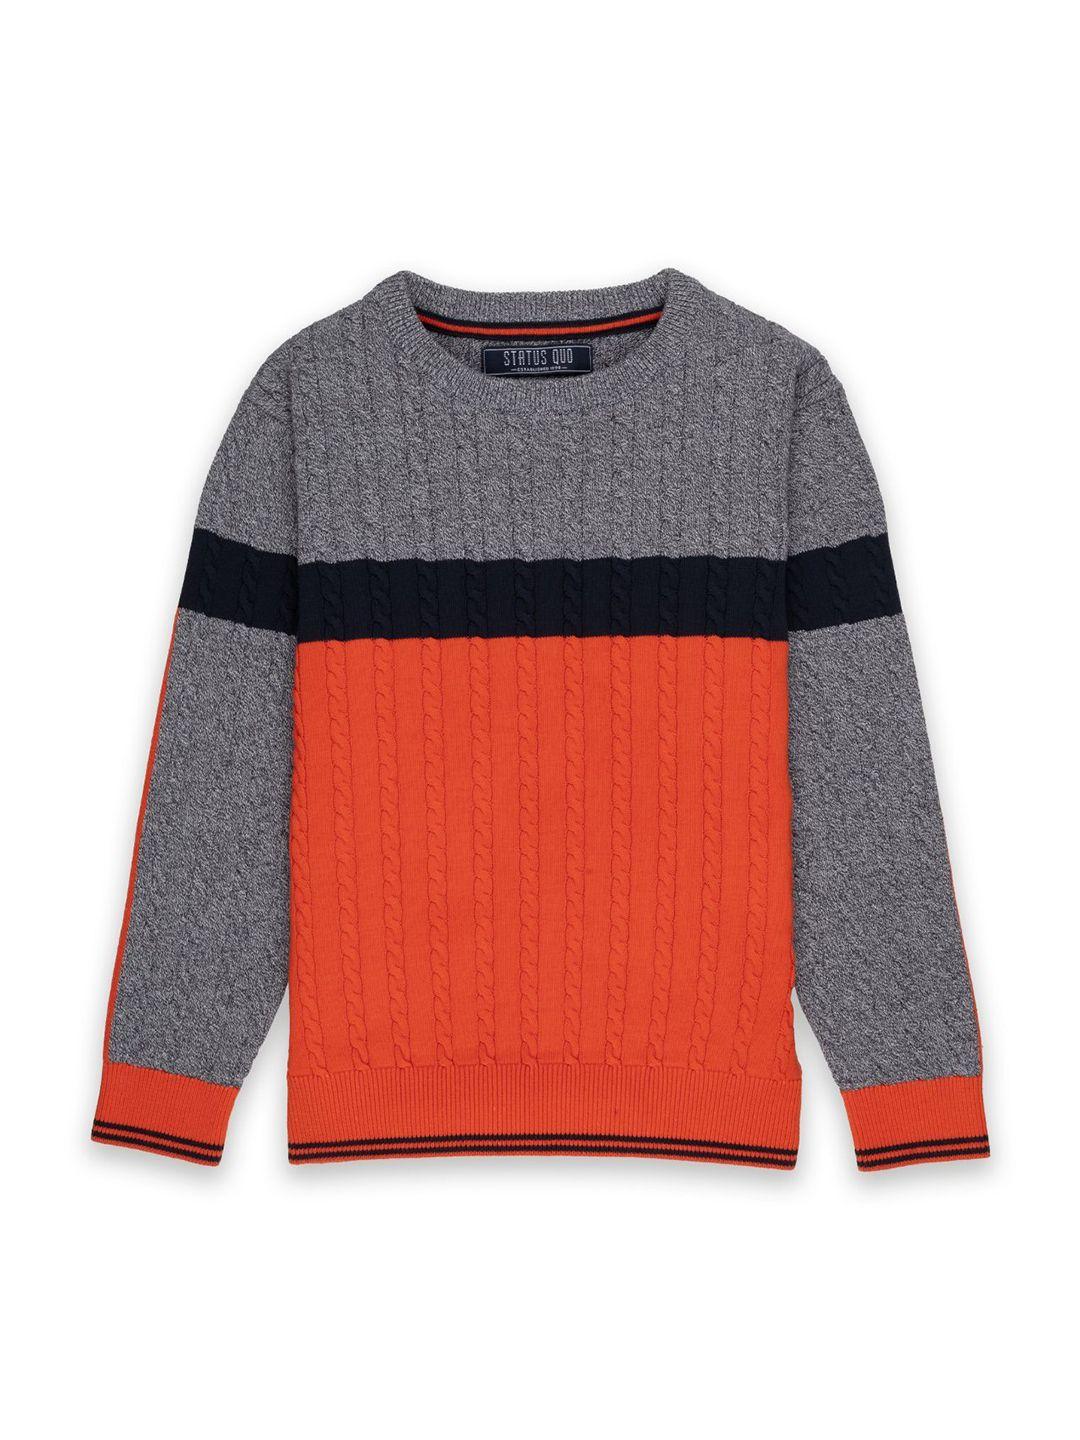 status quo boys orange & grey cable knit colourblocked pullover